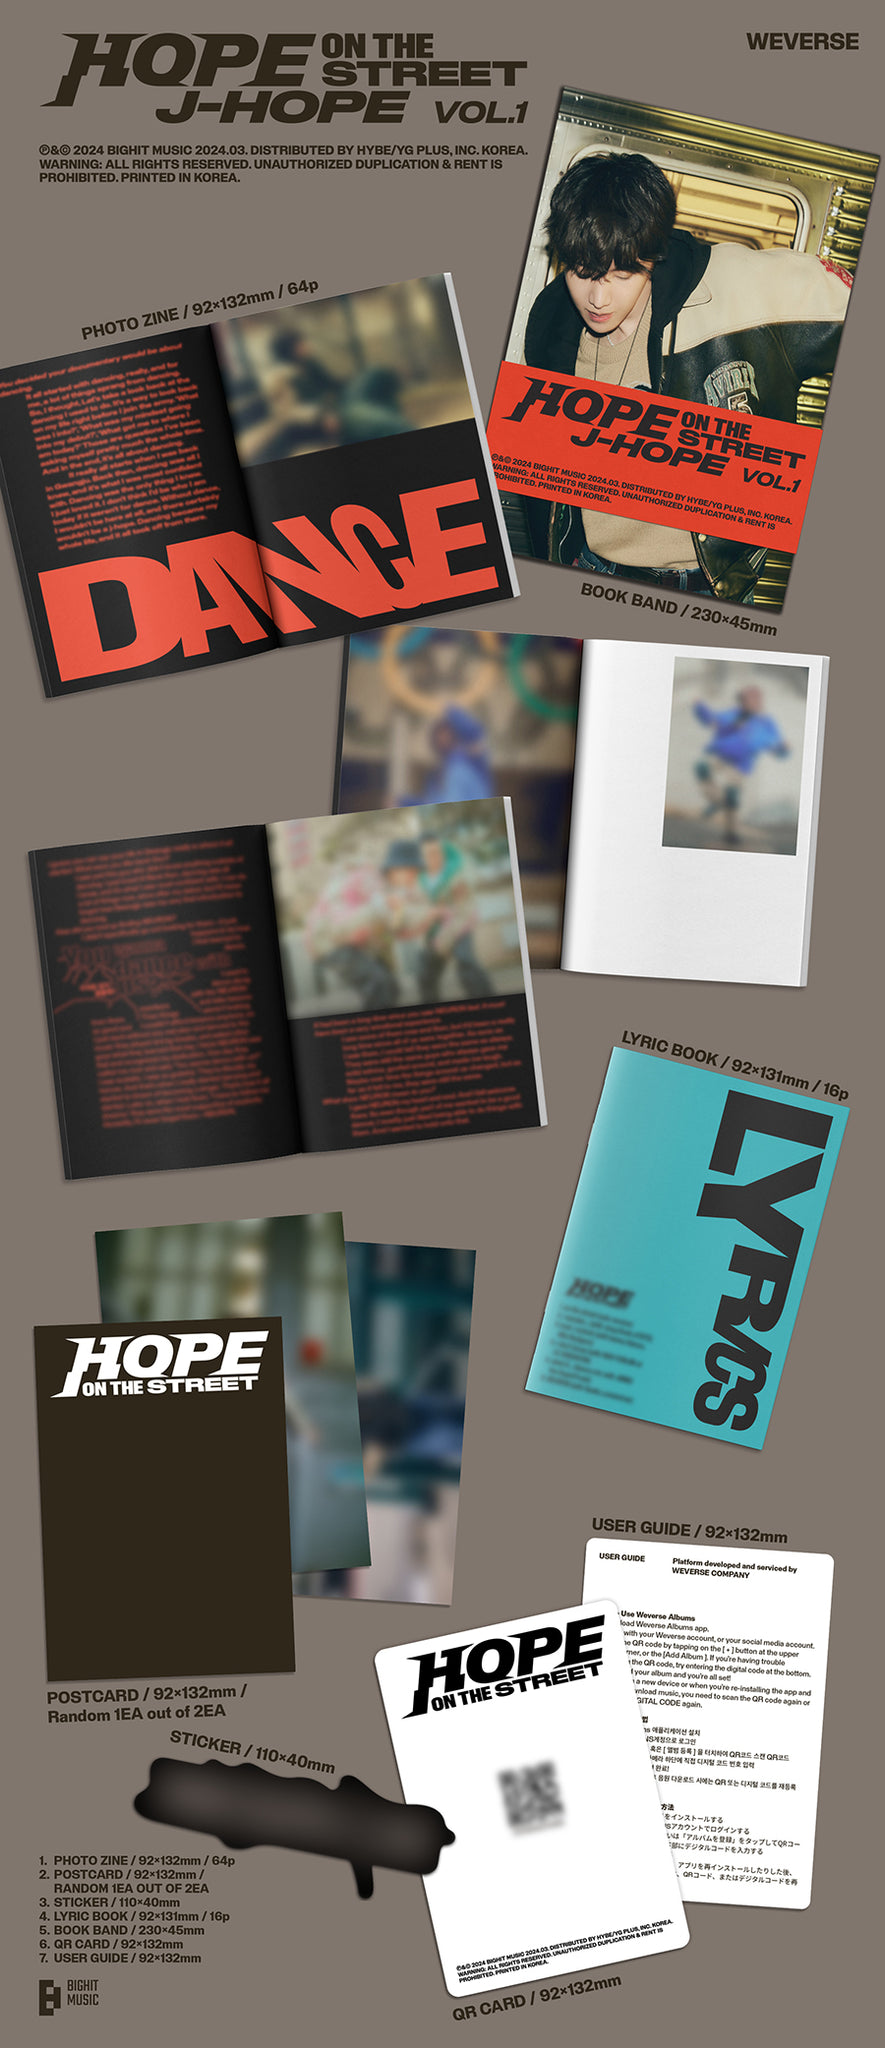 BTS j-hope - HOPE ON THE STREET VOL.1 (Weverse Albums ver.)